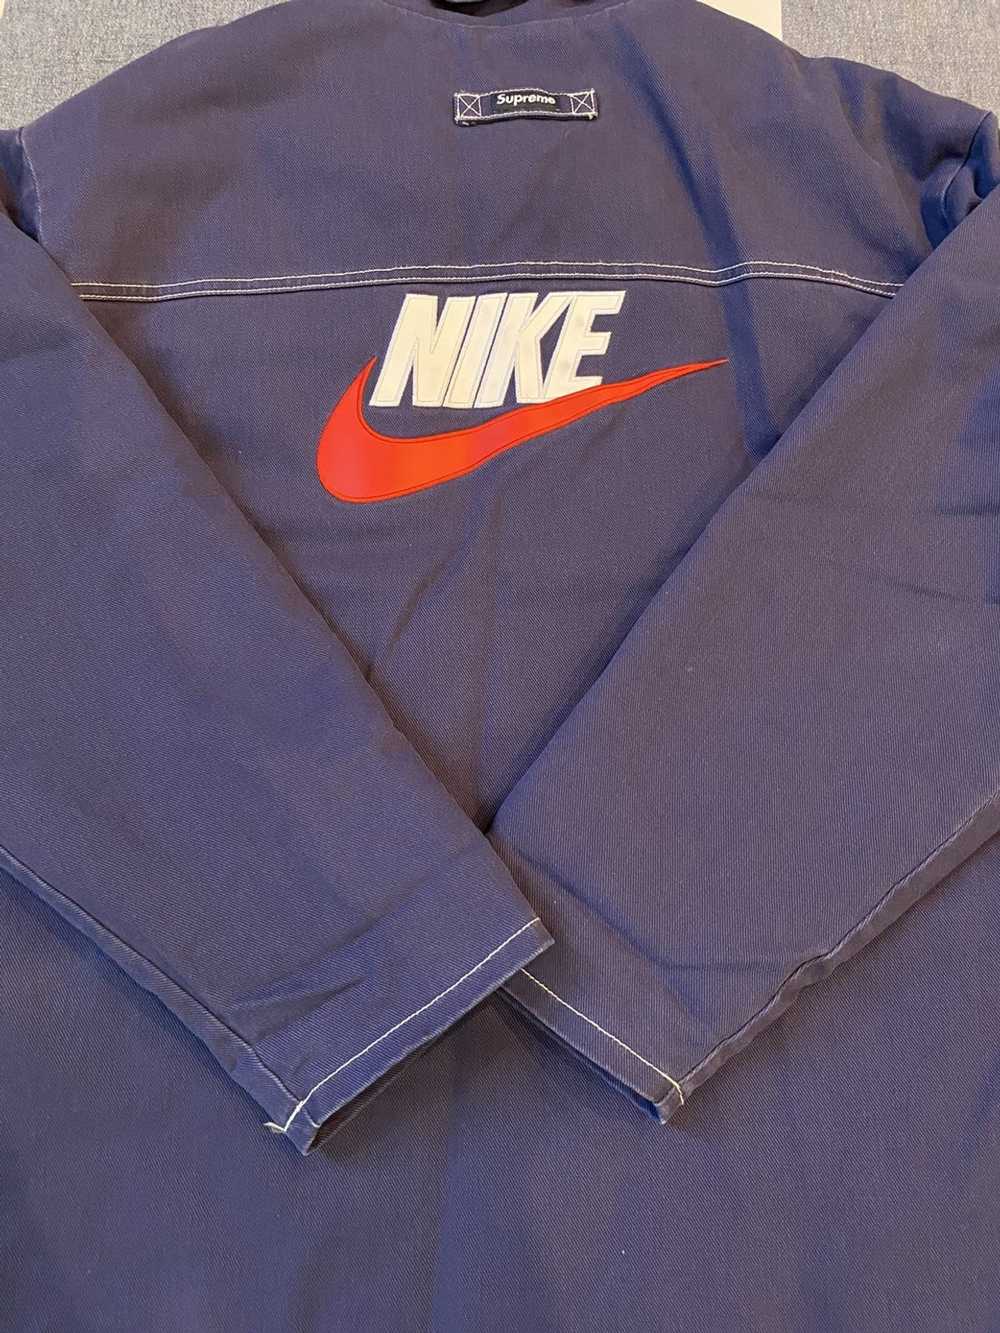 Nike × Supreme Supreme Nike Jacket - image 4